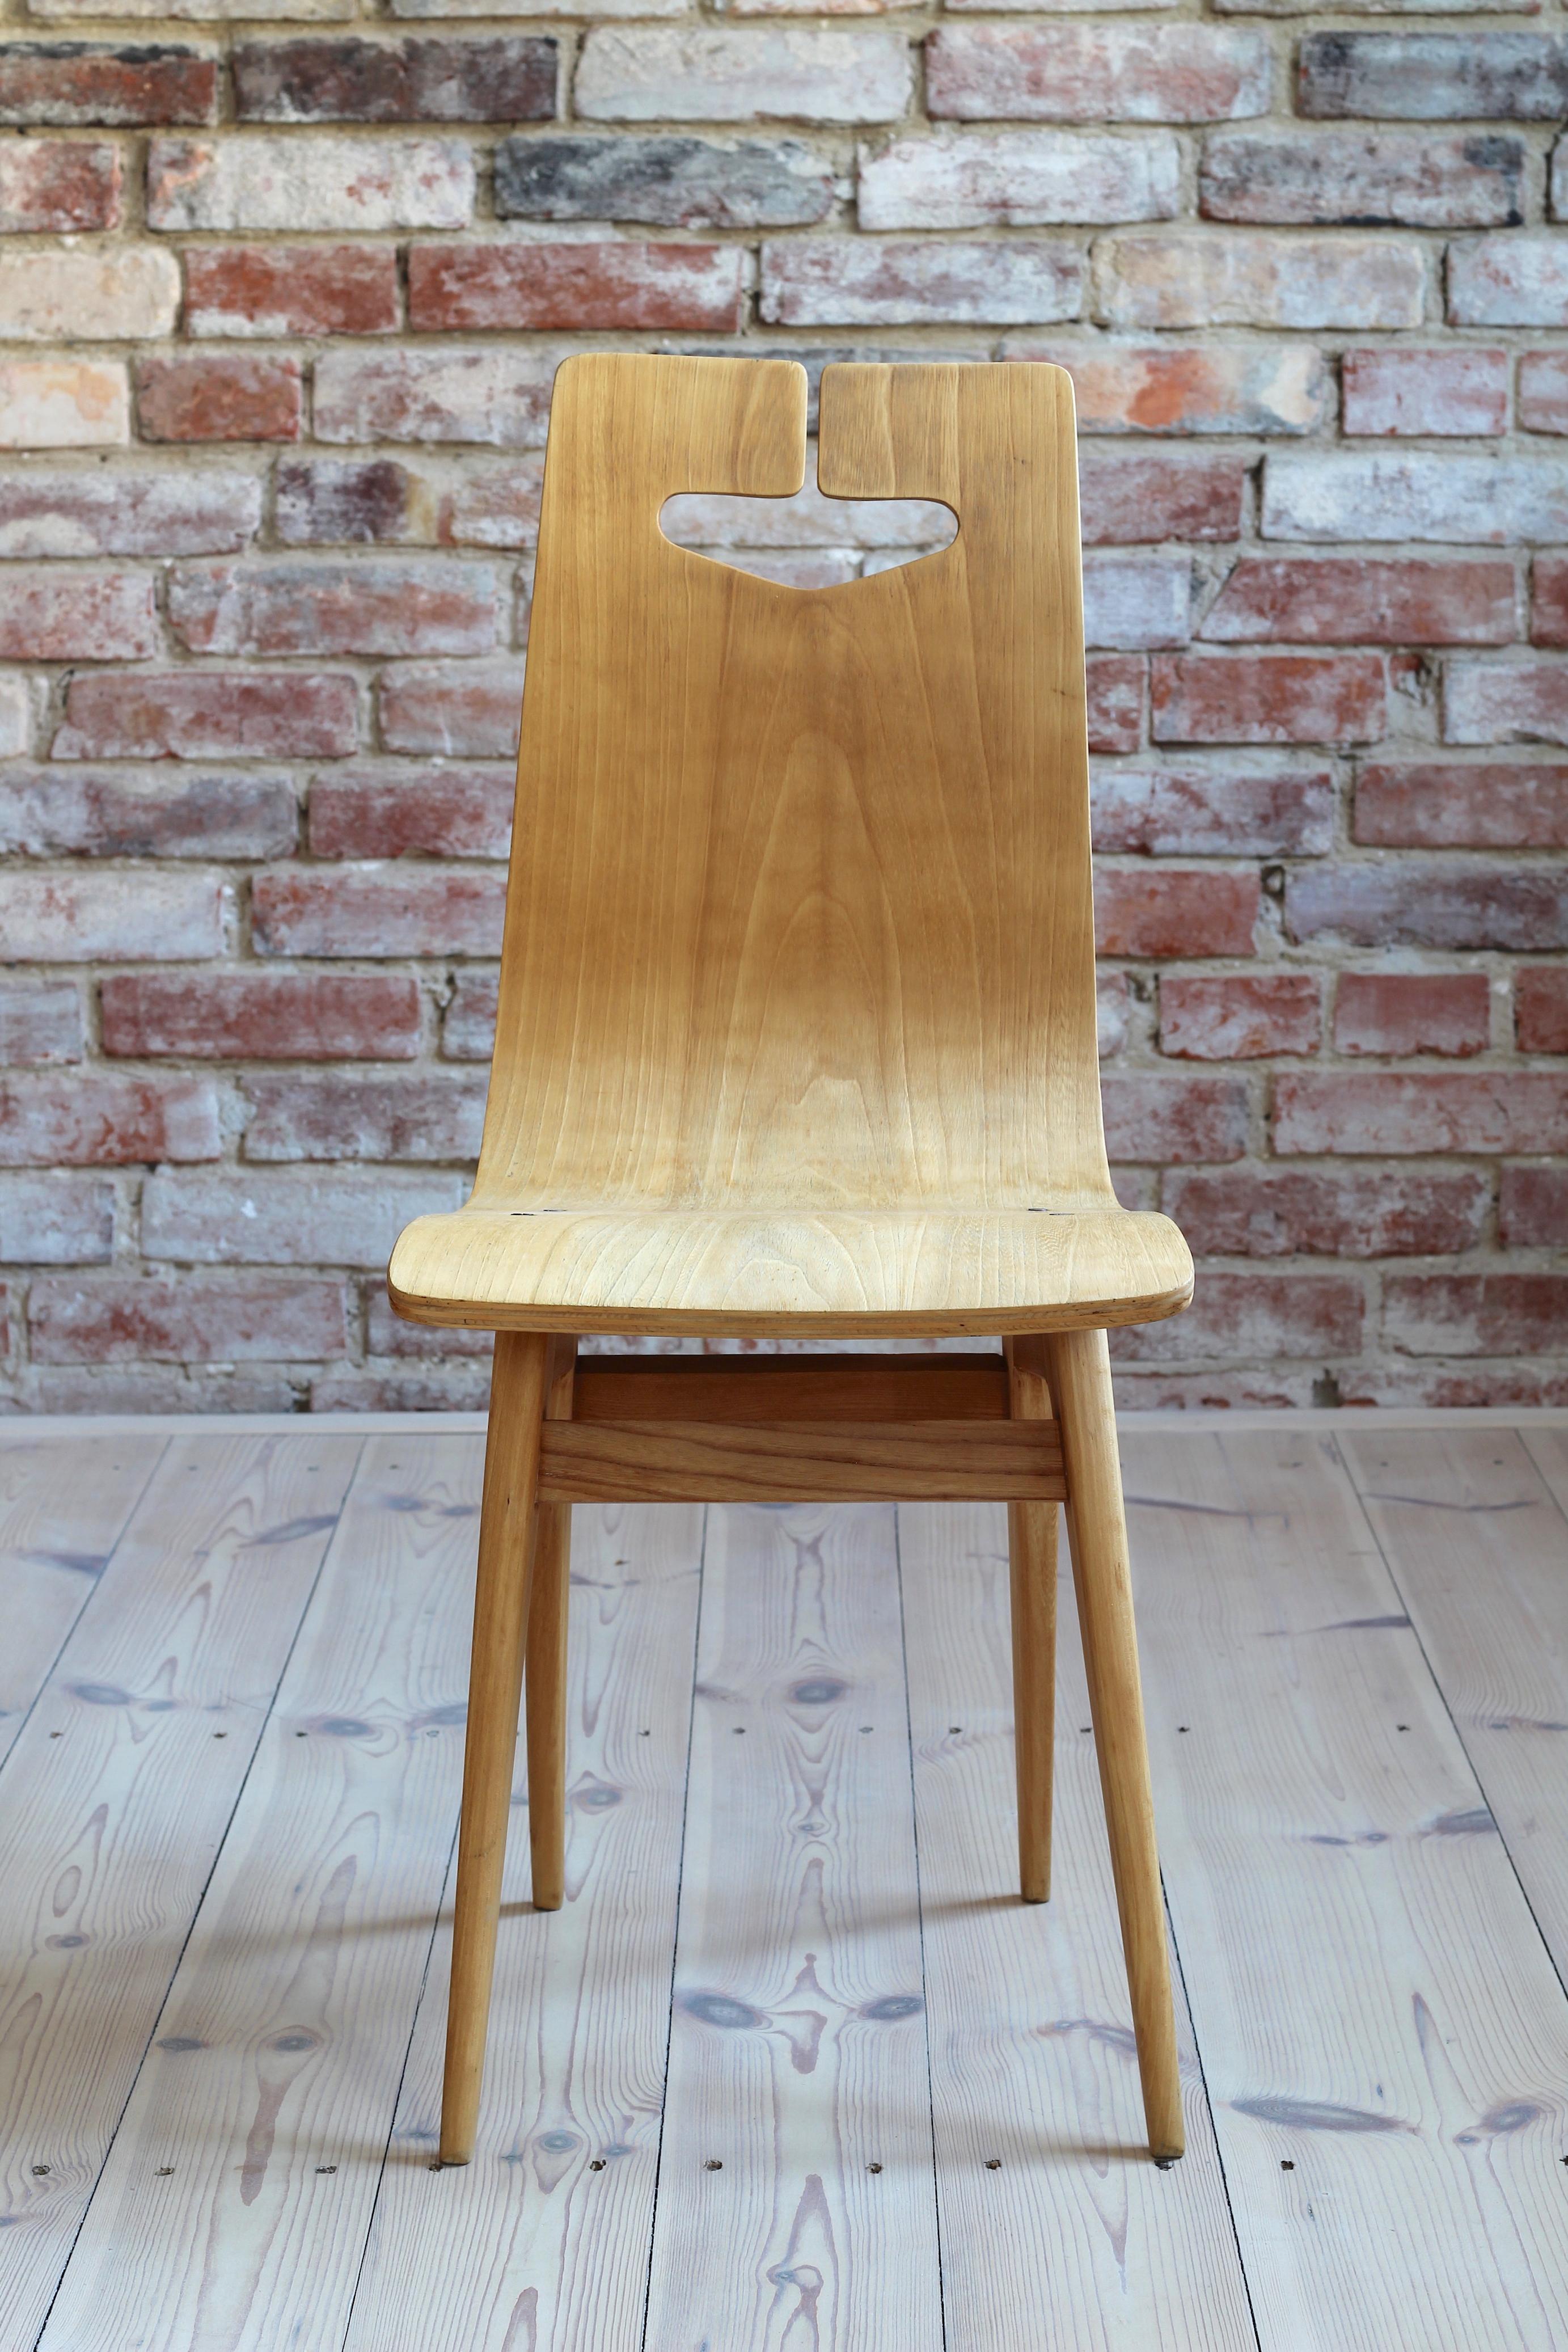 Mid-20th Century Rajmund Hałas Chairs for Bydgoskie Fabryki Mebli, 1960s, Plywood, Ash Veneer